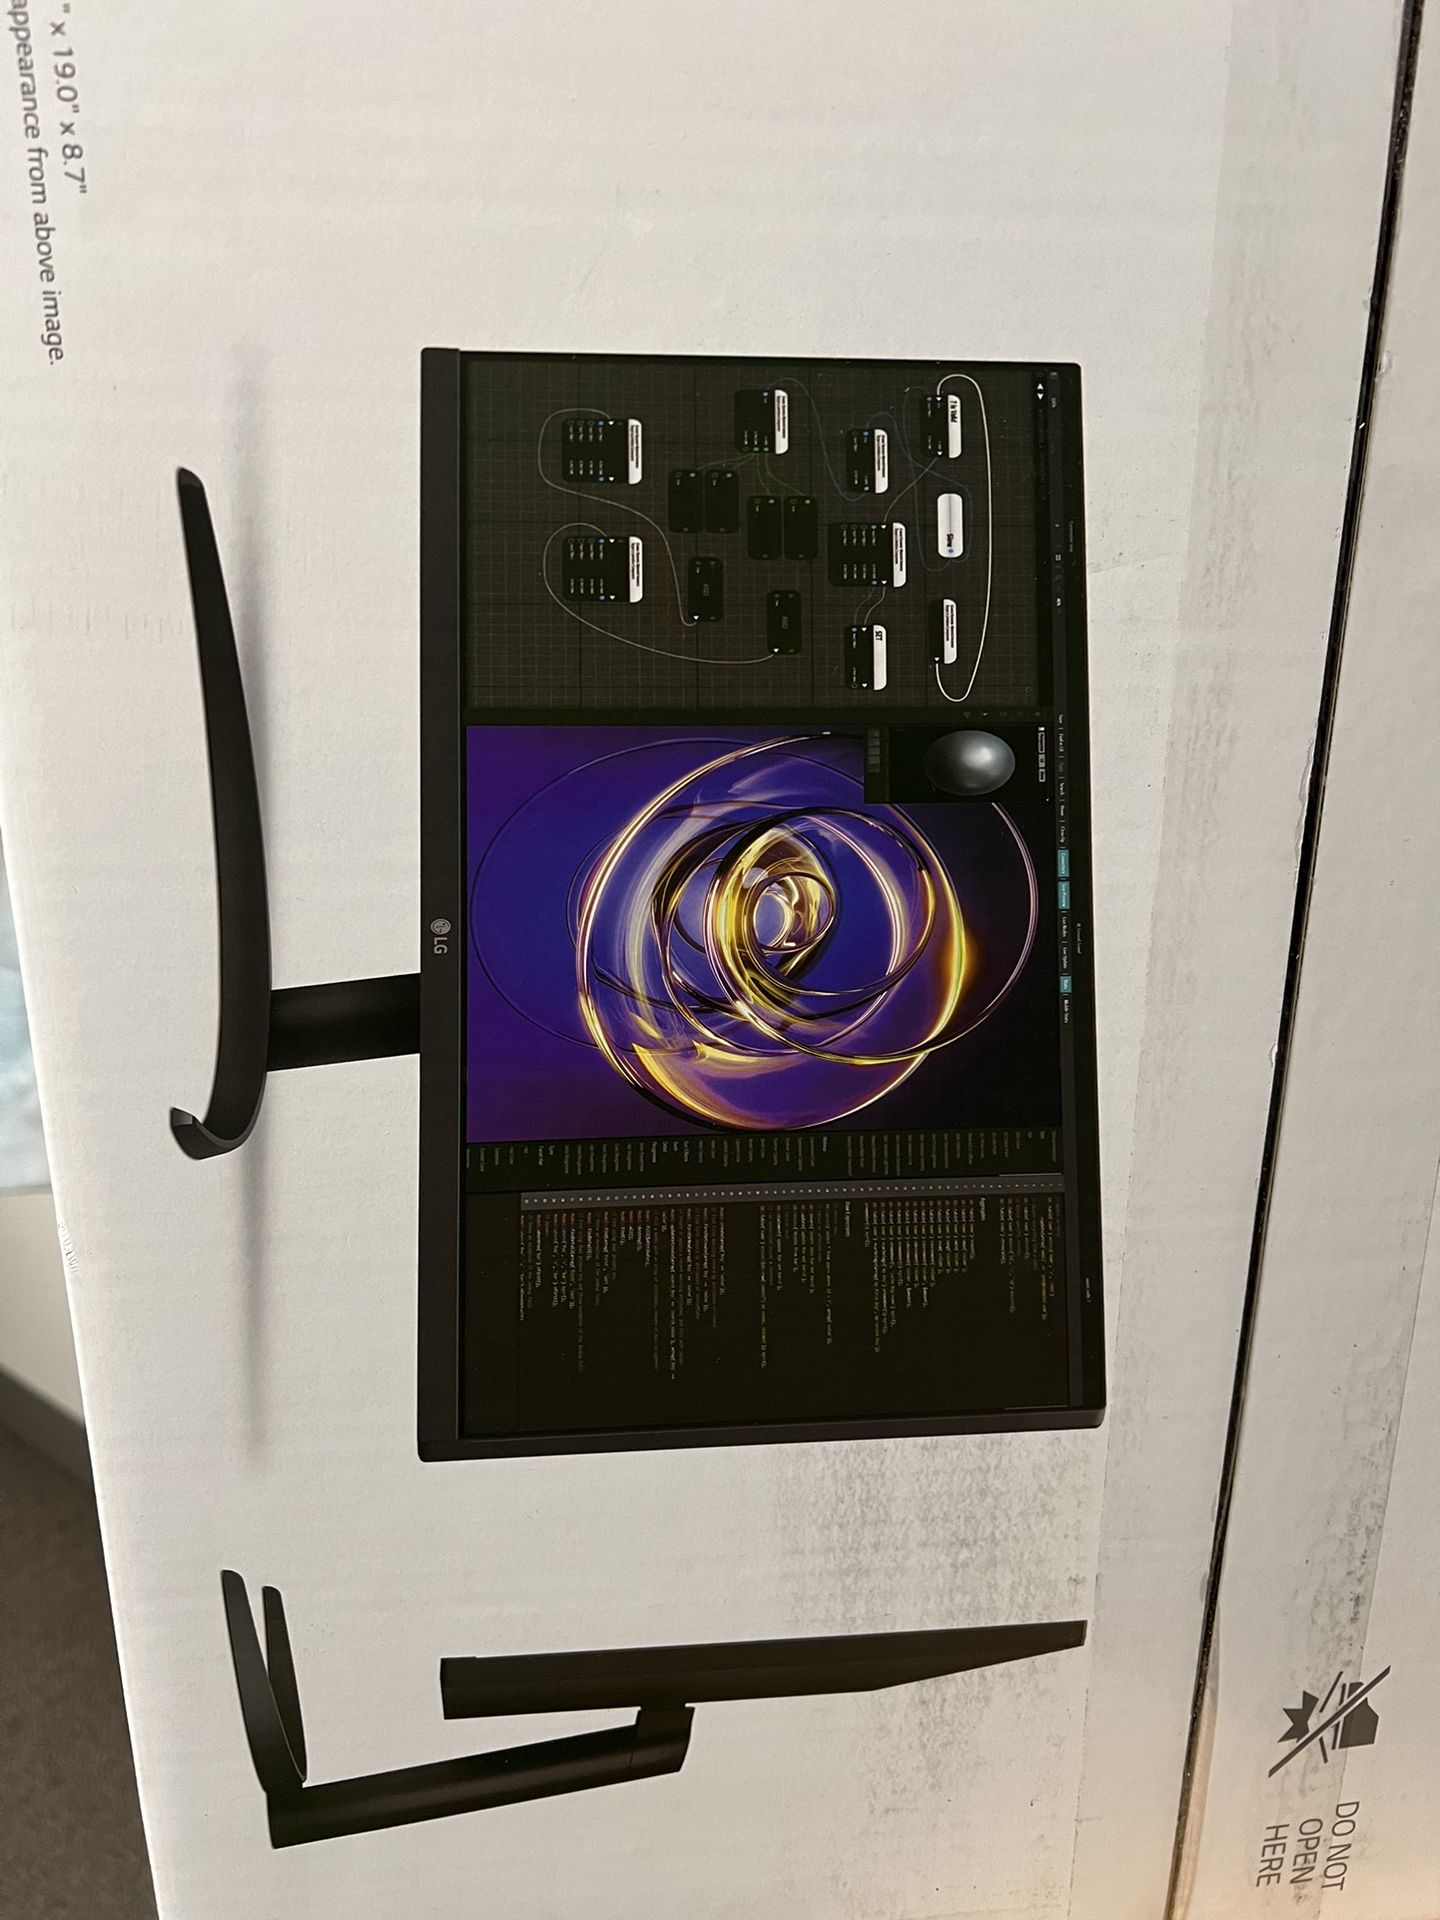 LG 34” Ultrawide Computer Monitor